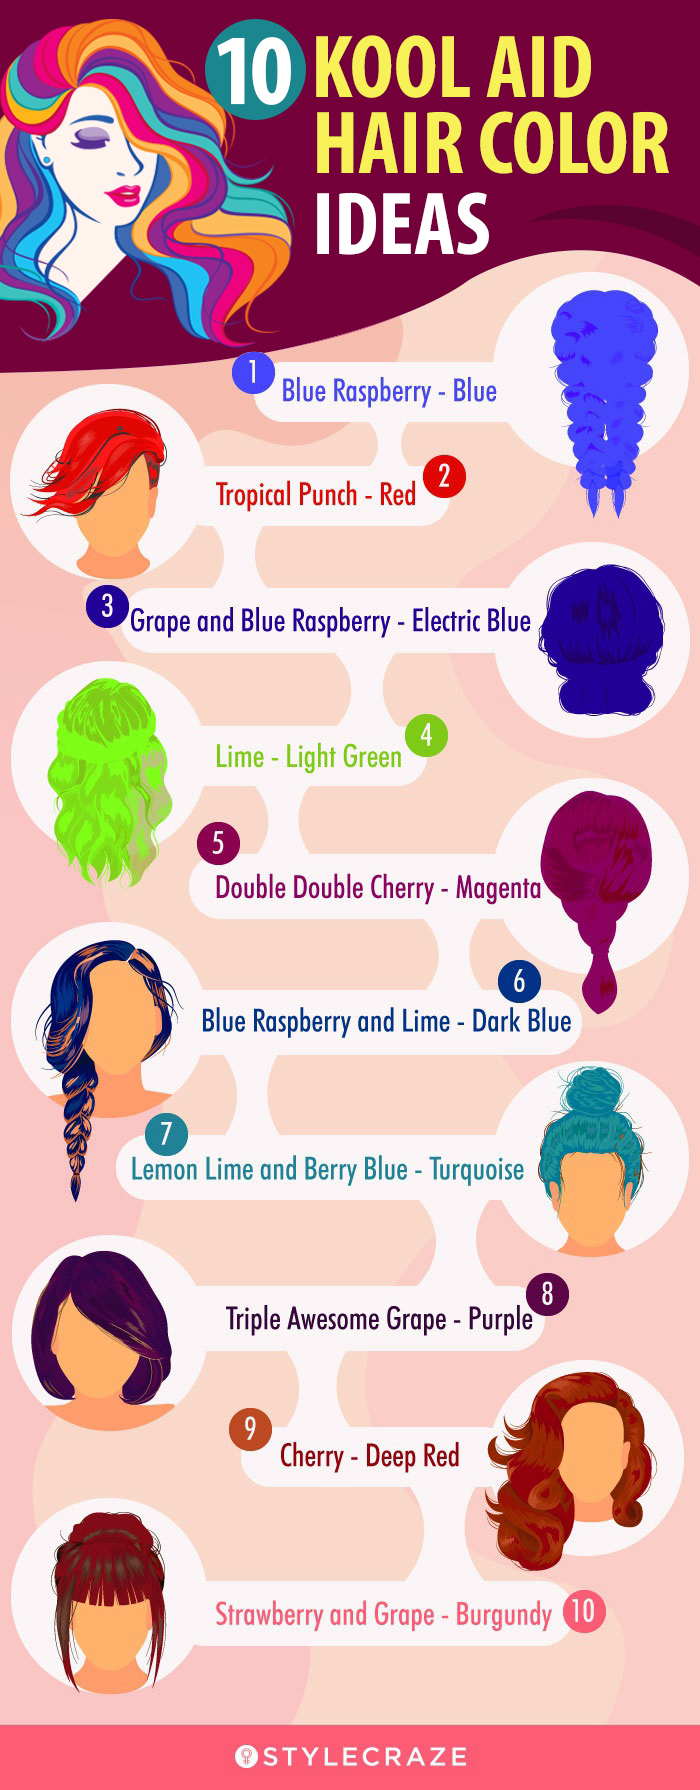 10 kool aid hair color ideas (infographic)